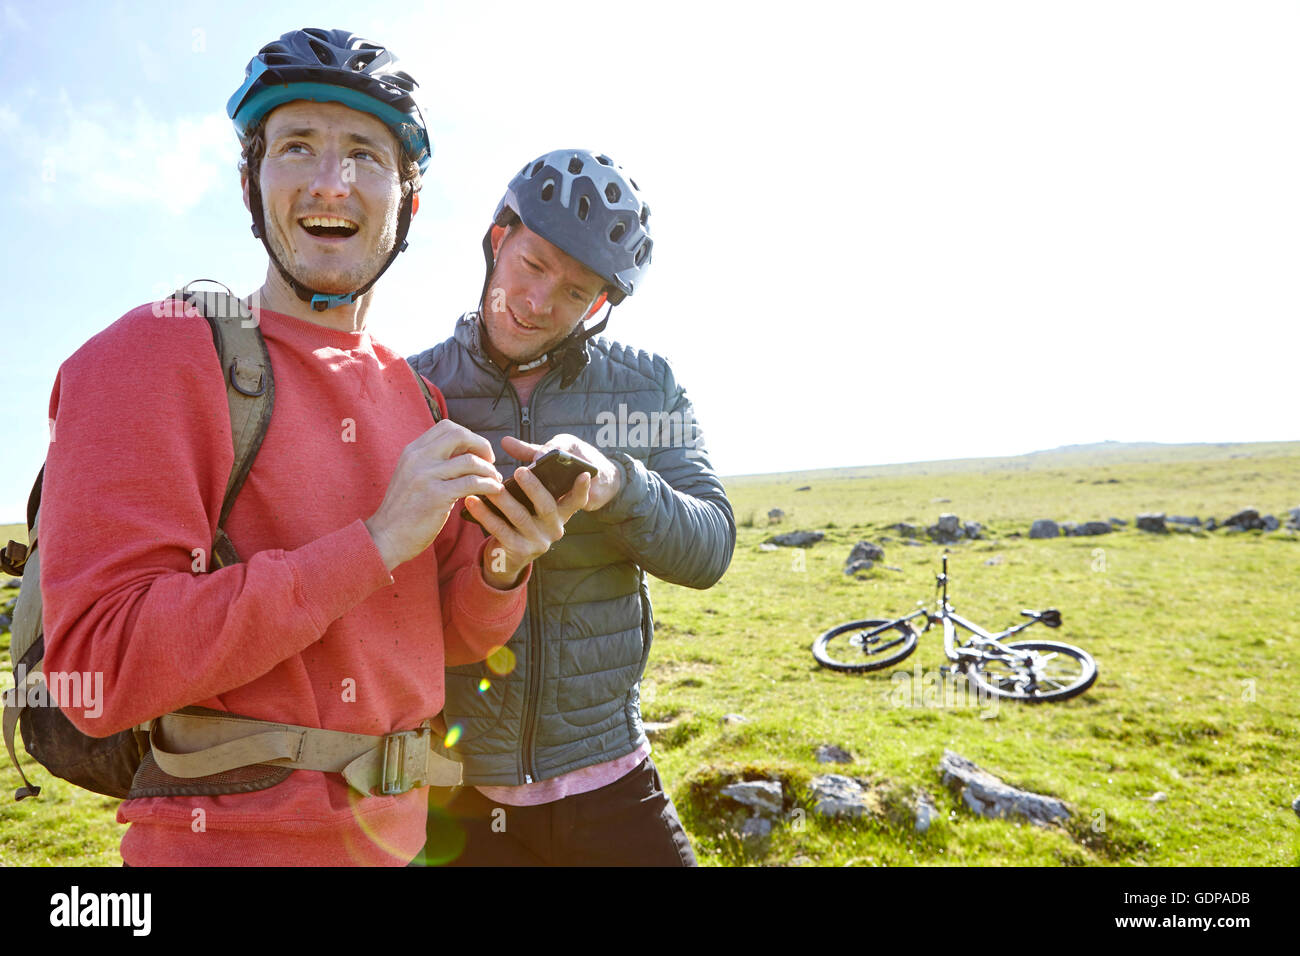 Les cyclistes sur hillside looking at smartphone Banque D'Images